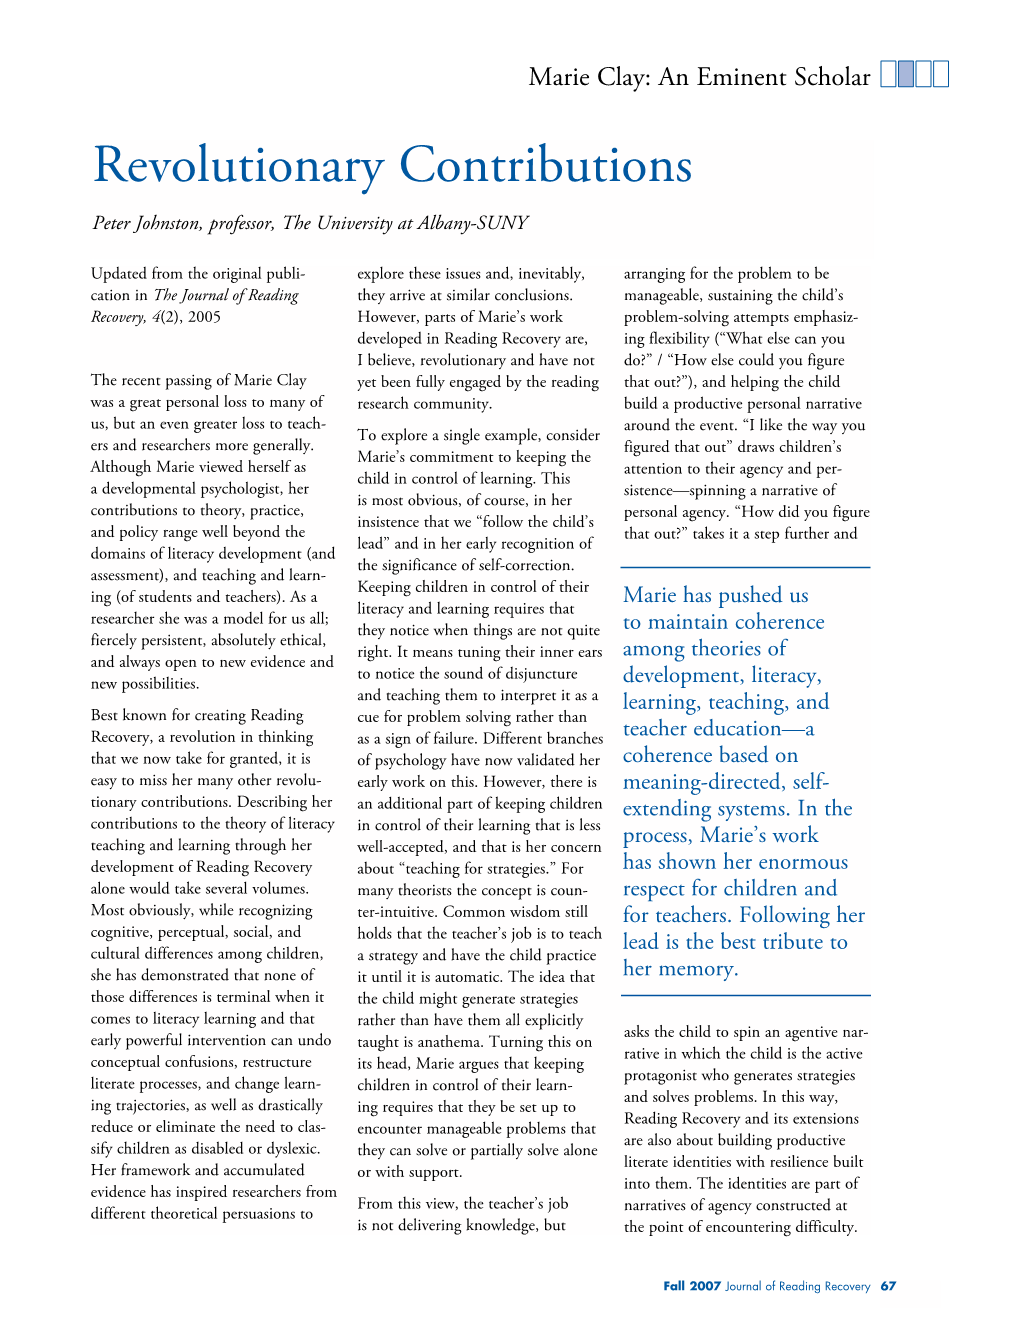 Revolutionary Contributions Peter Johnston, Professor, the University at Albany-SUNY